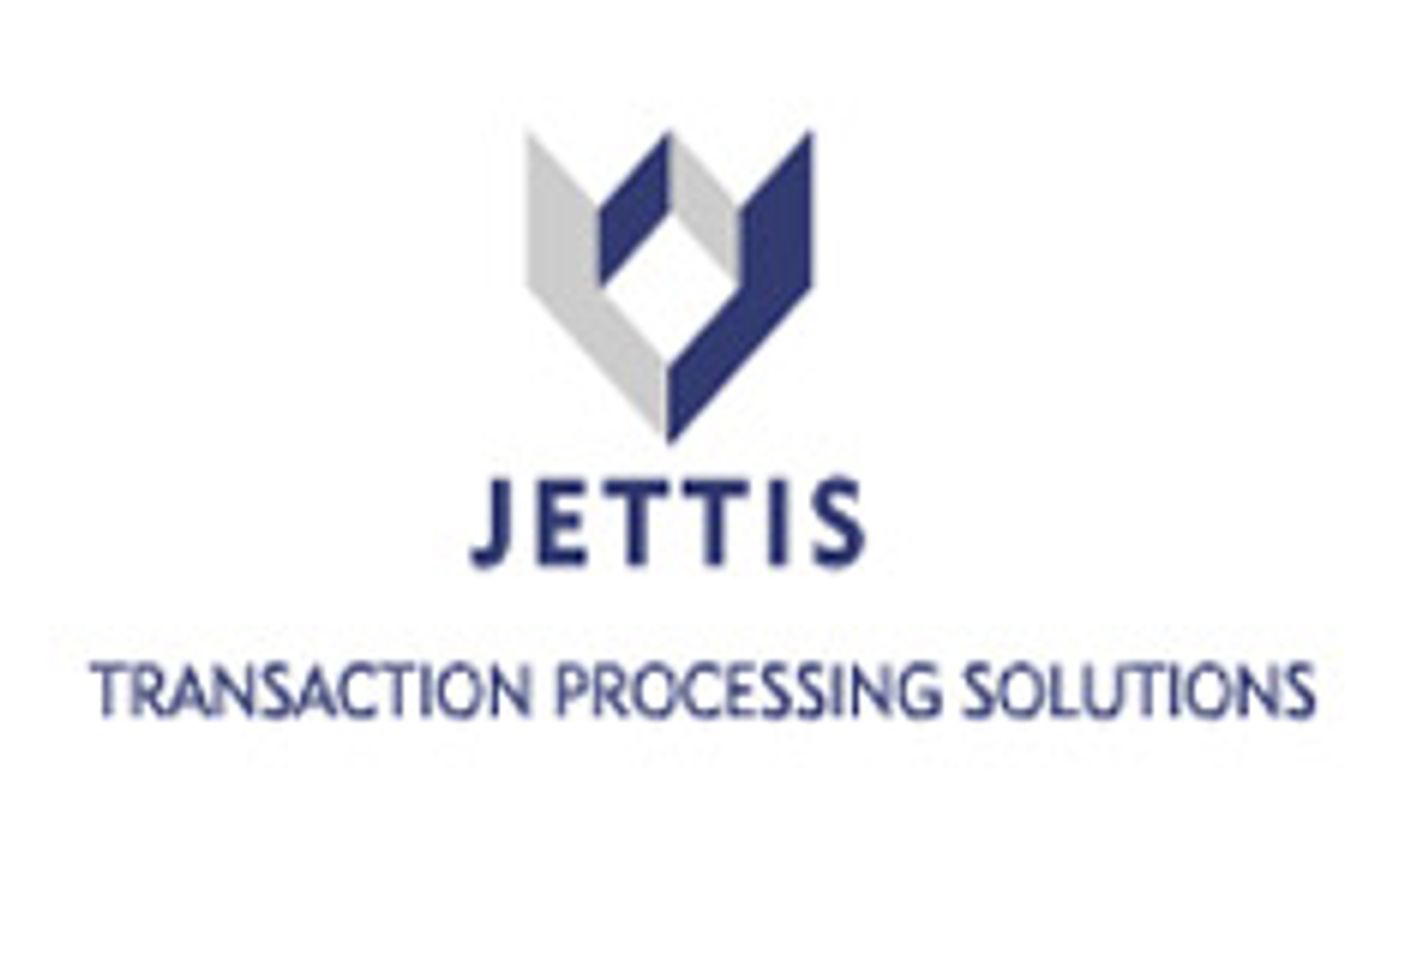 Jettis Clients No Longer Processing Visa EU Transactions